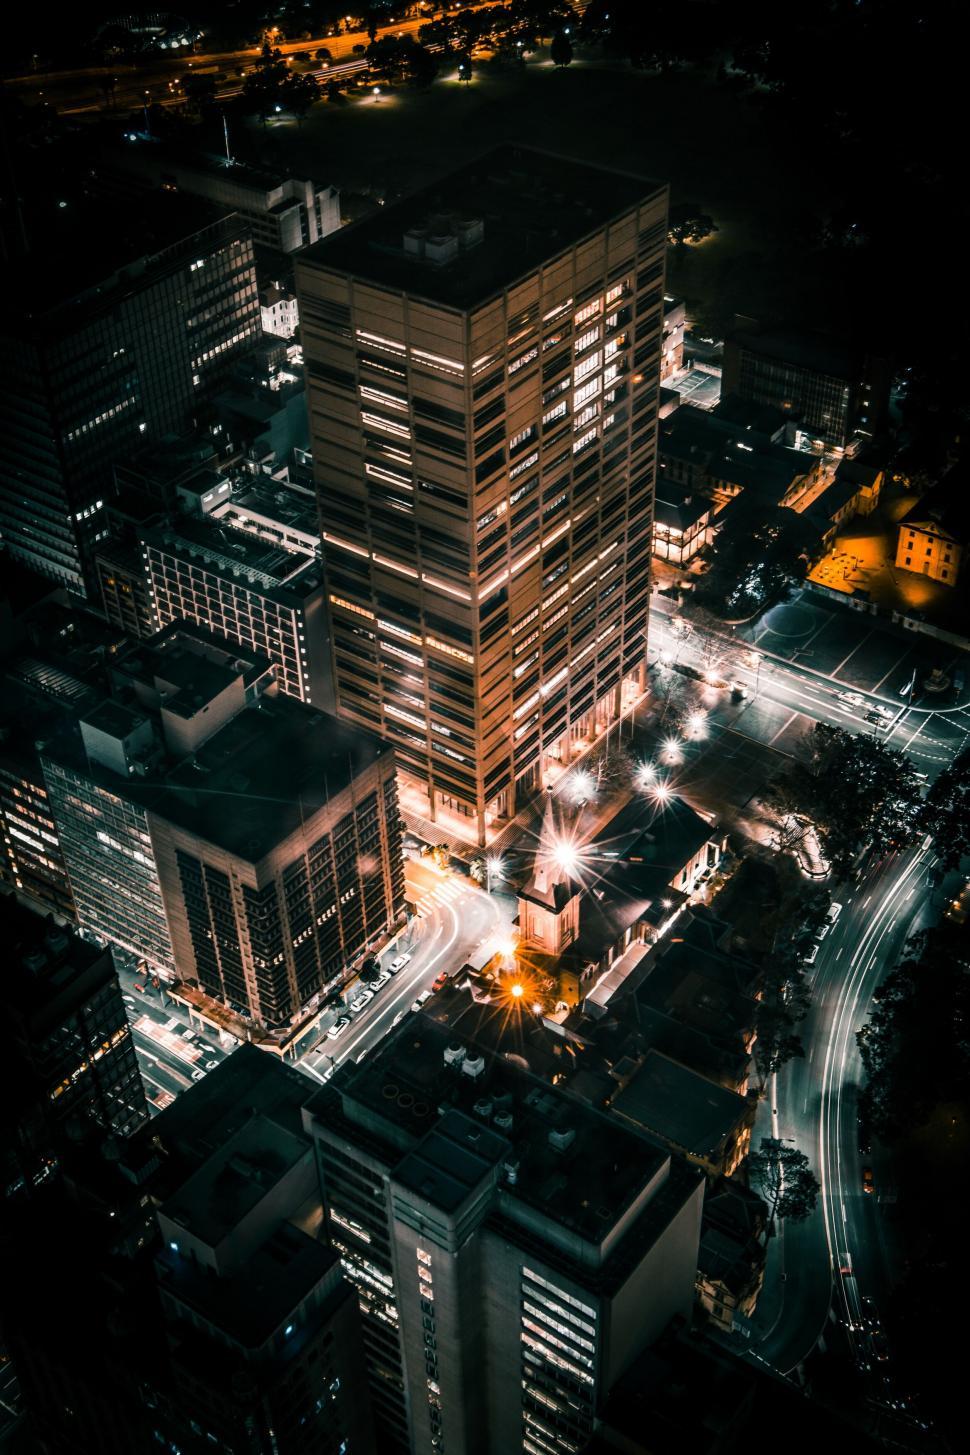 Free Image of Illuminated skyscraper in city at night 